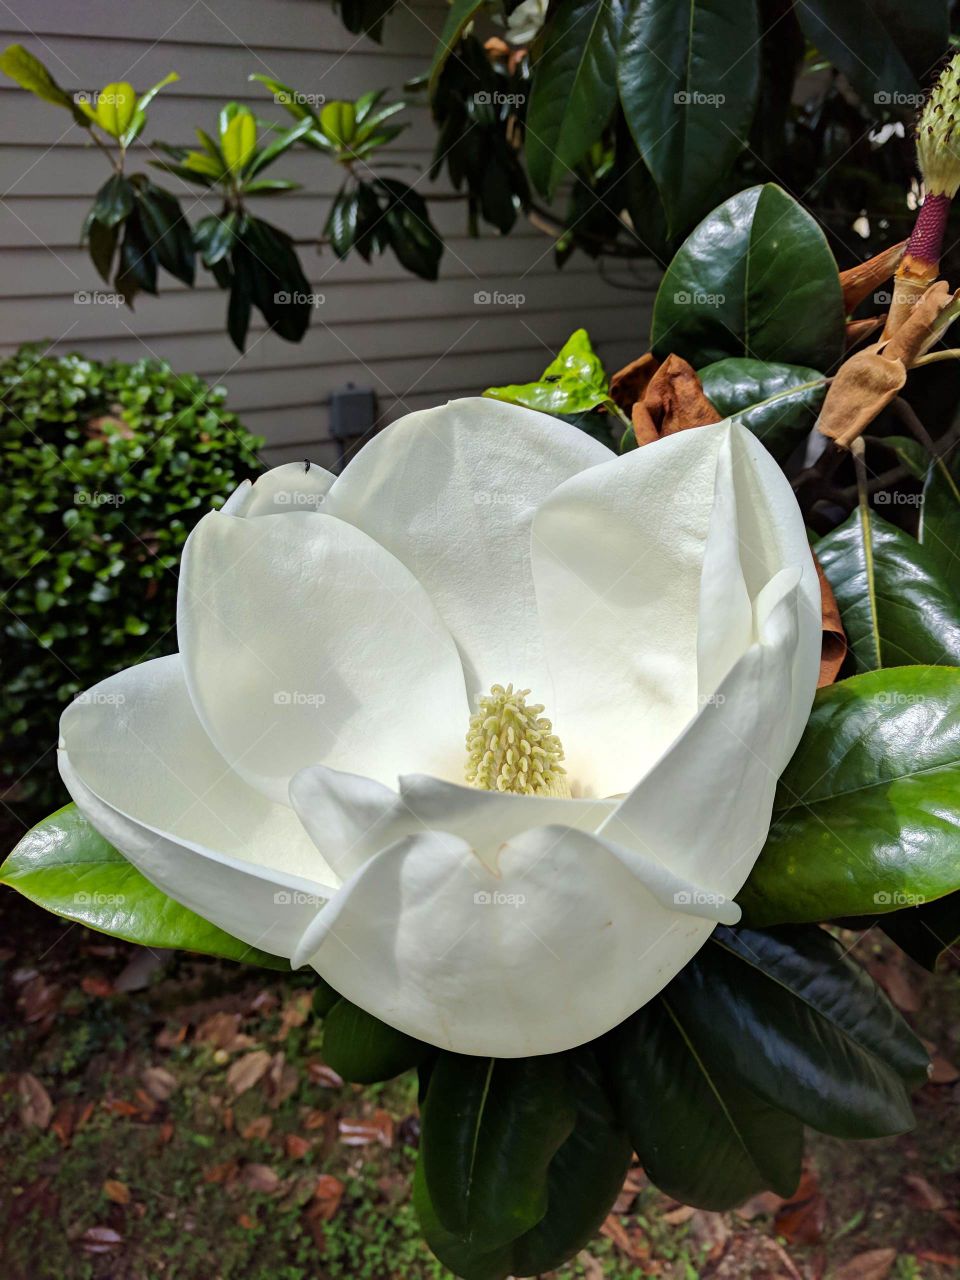 My dear magnolia